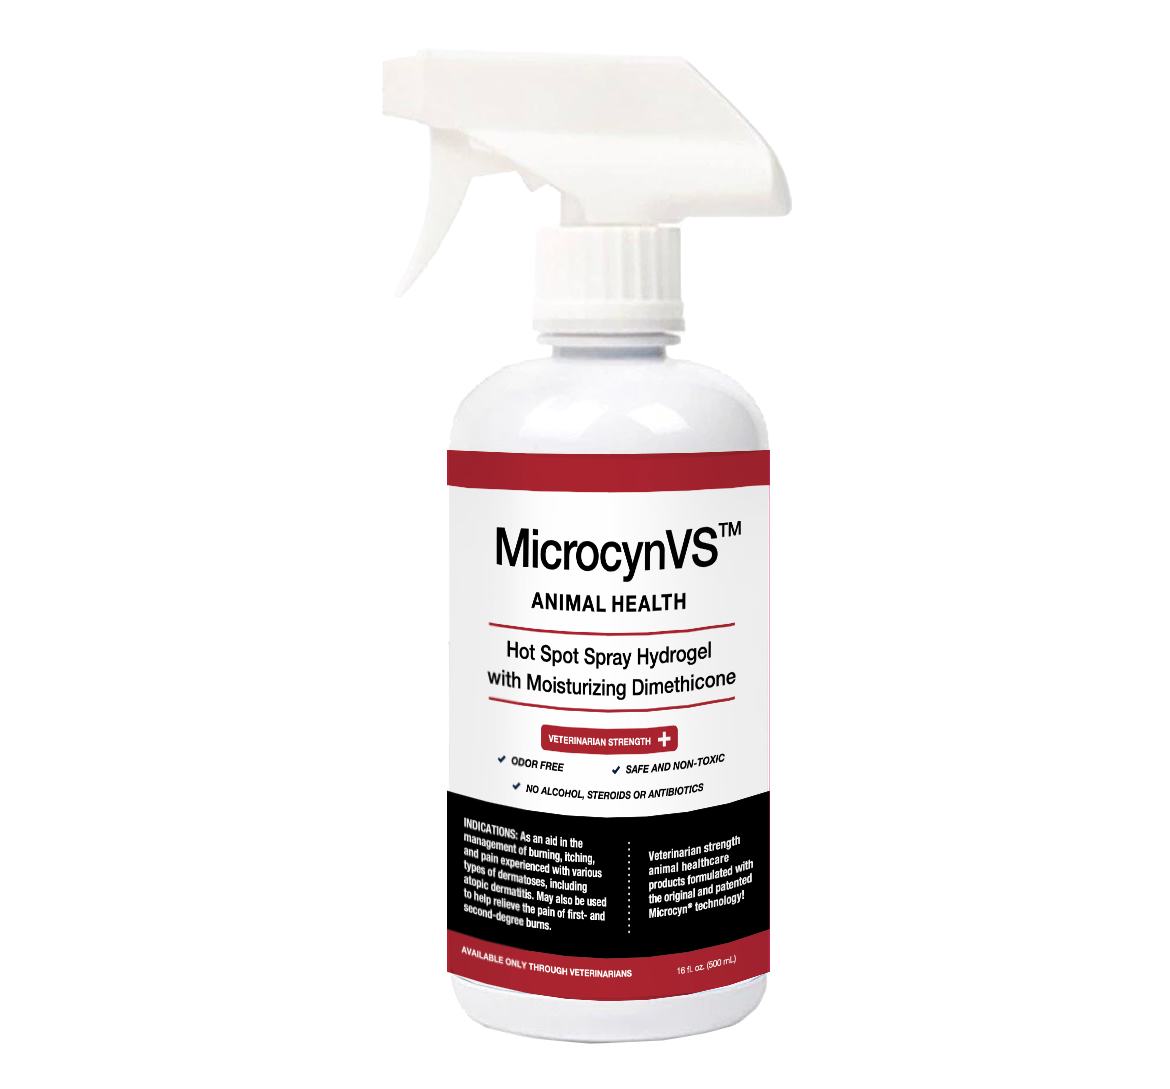 MicrocynVS Hot Spot Spray Hydrogel